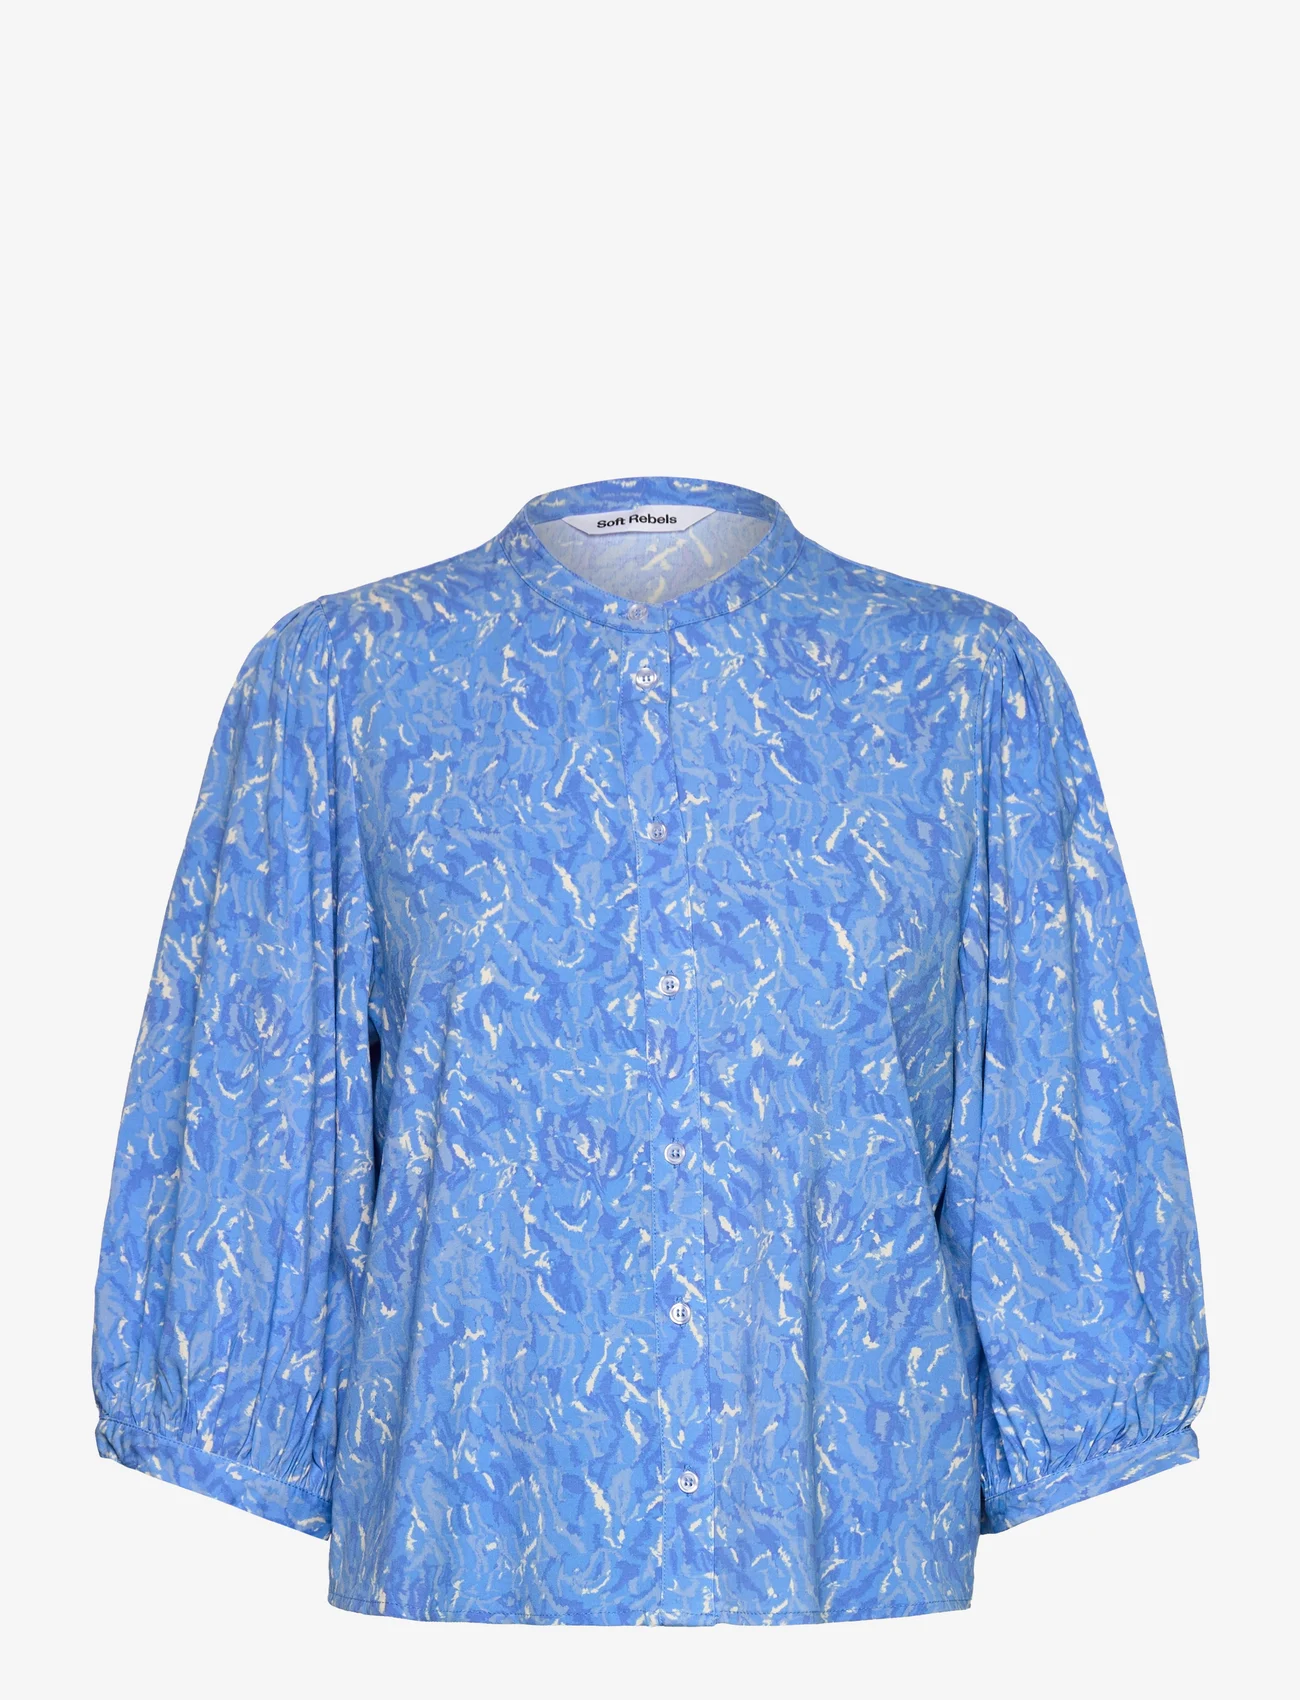 Soft Rebels - SRBriella Elma Shirt - langärmlige blusen - graphic animal azure blue print - 0